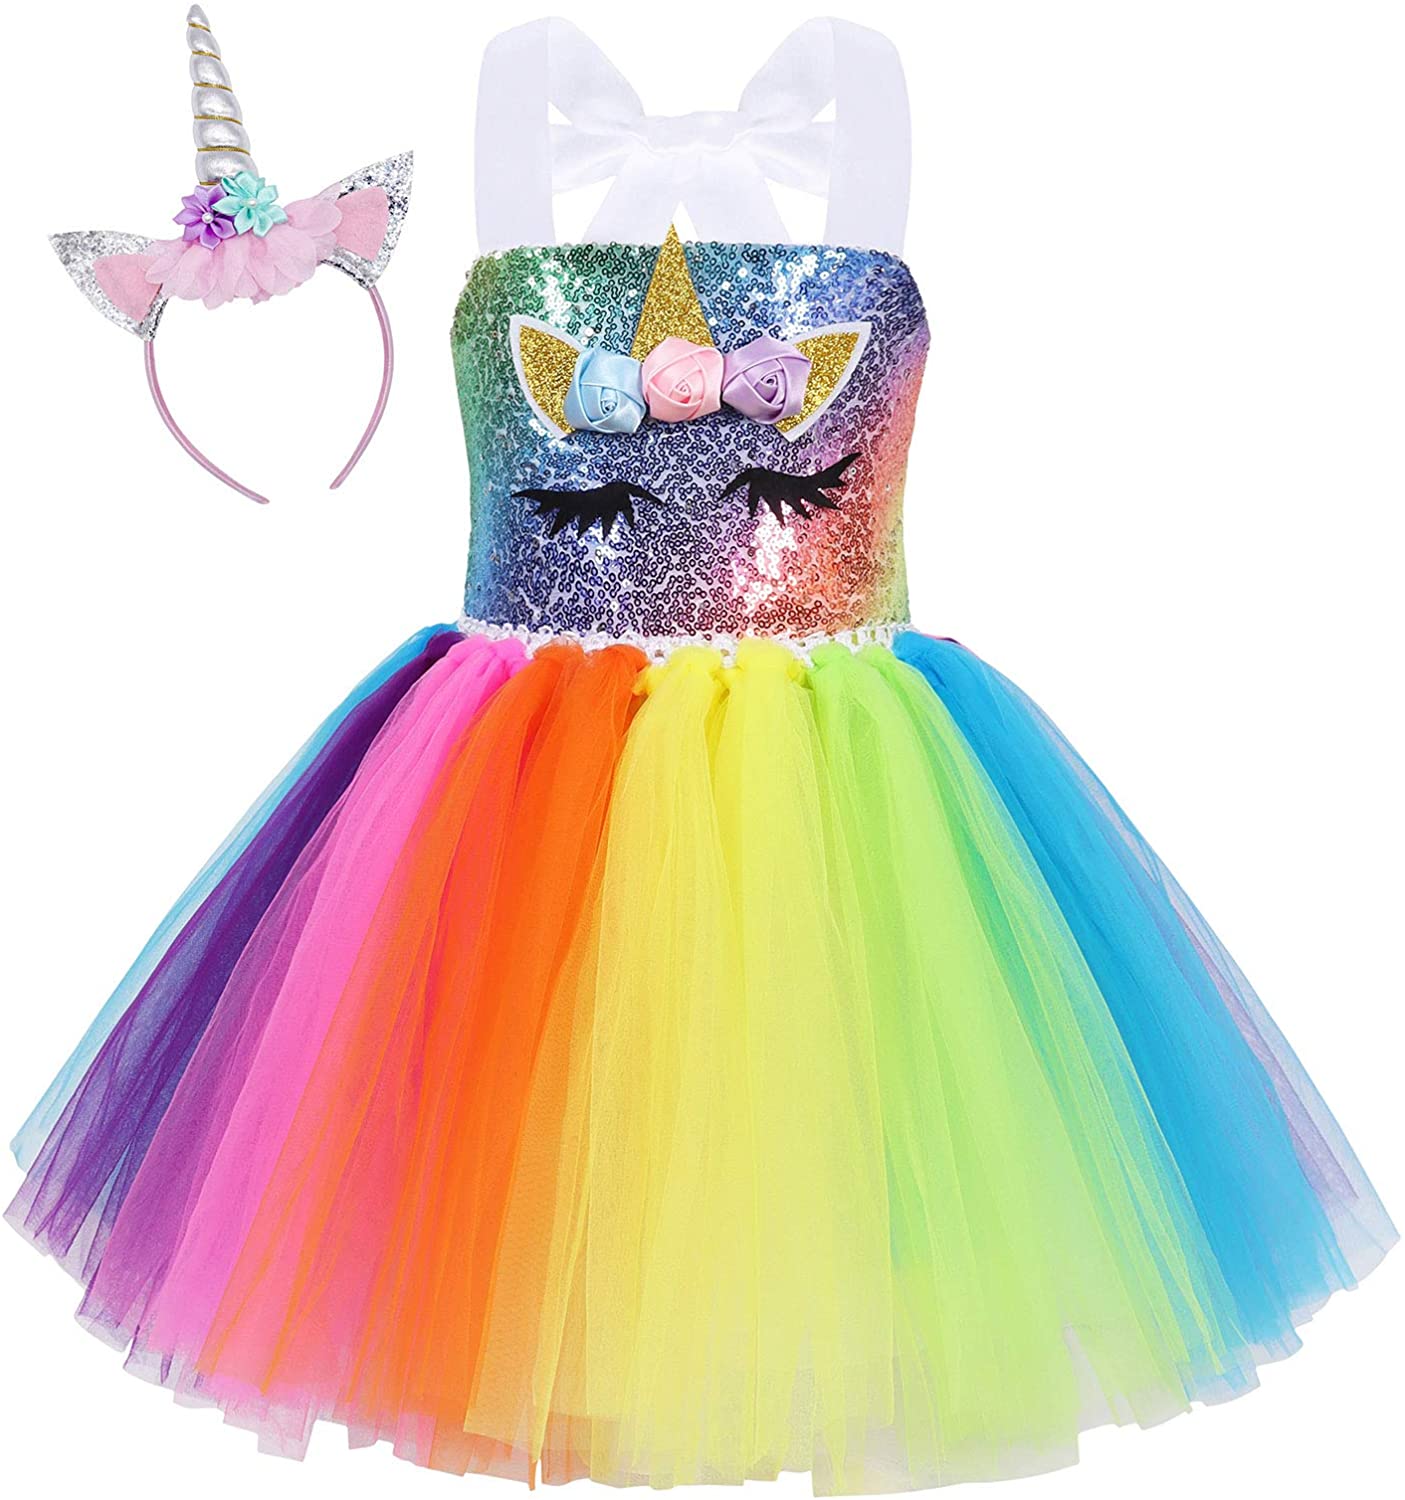 Headband Princess Dress HenzWorld Baby Girls 1st Birthday Outfit Unicorn Costume Tutu Skirt